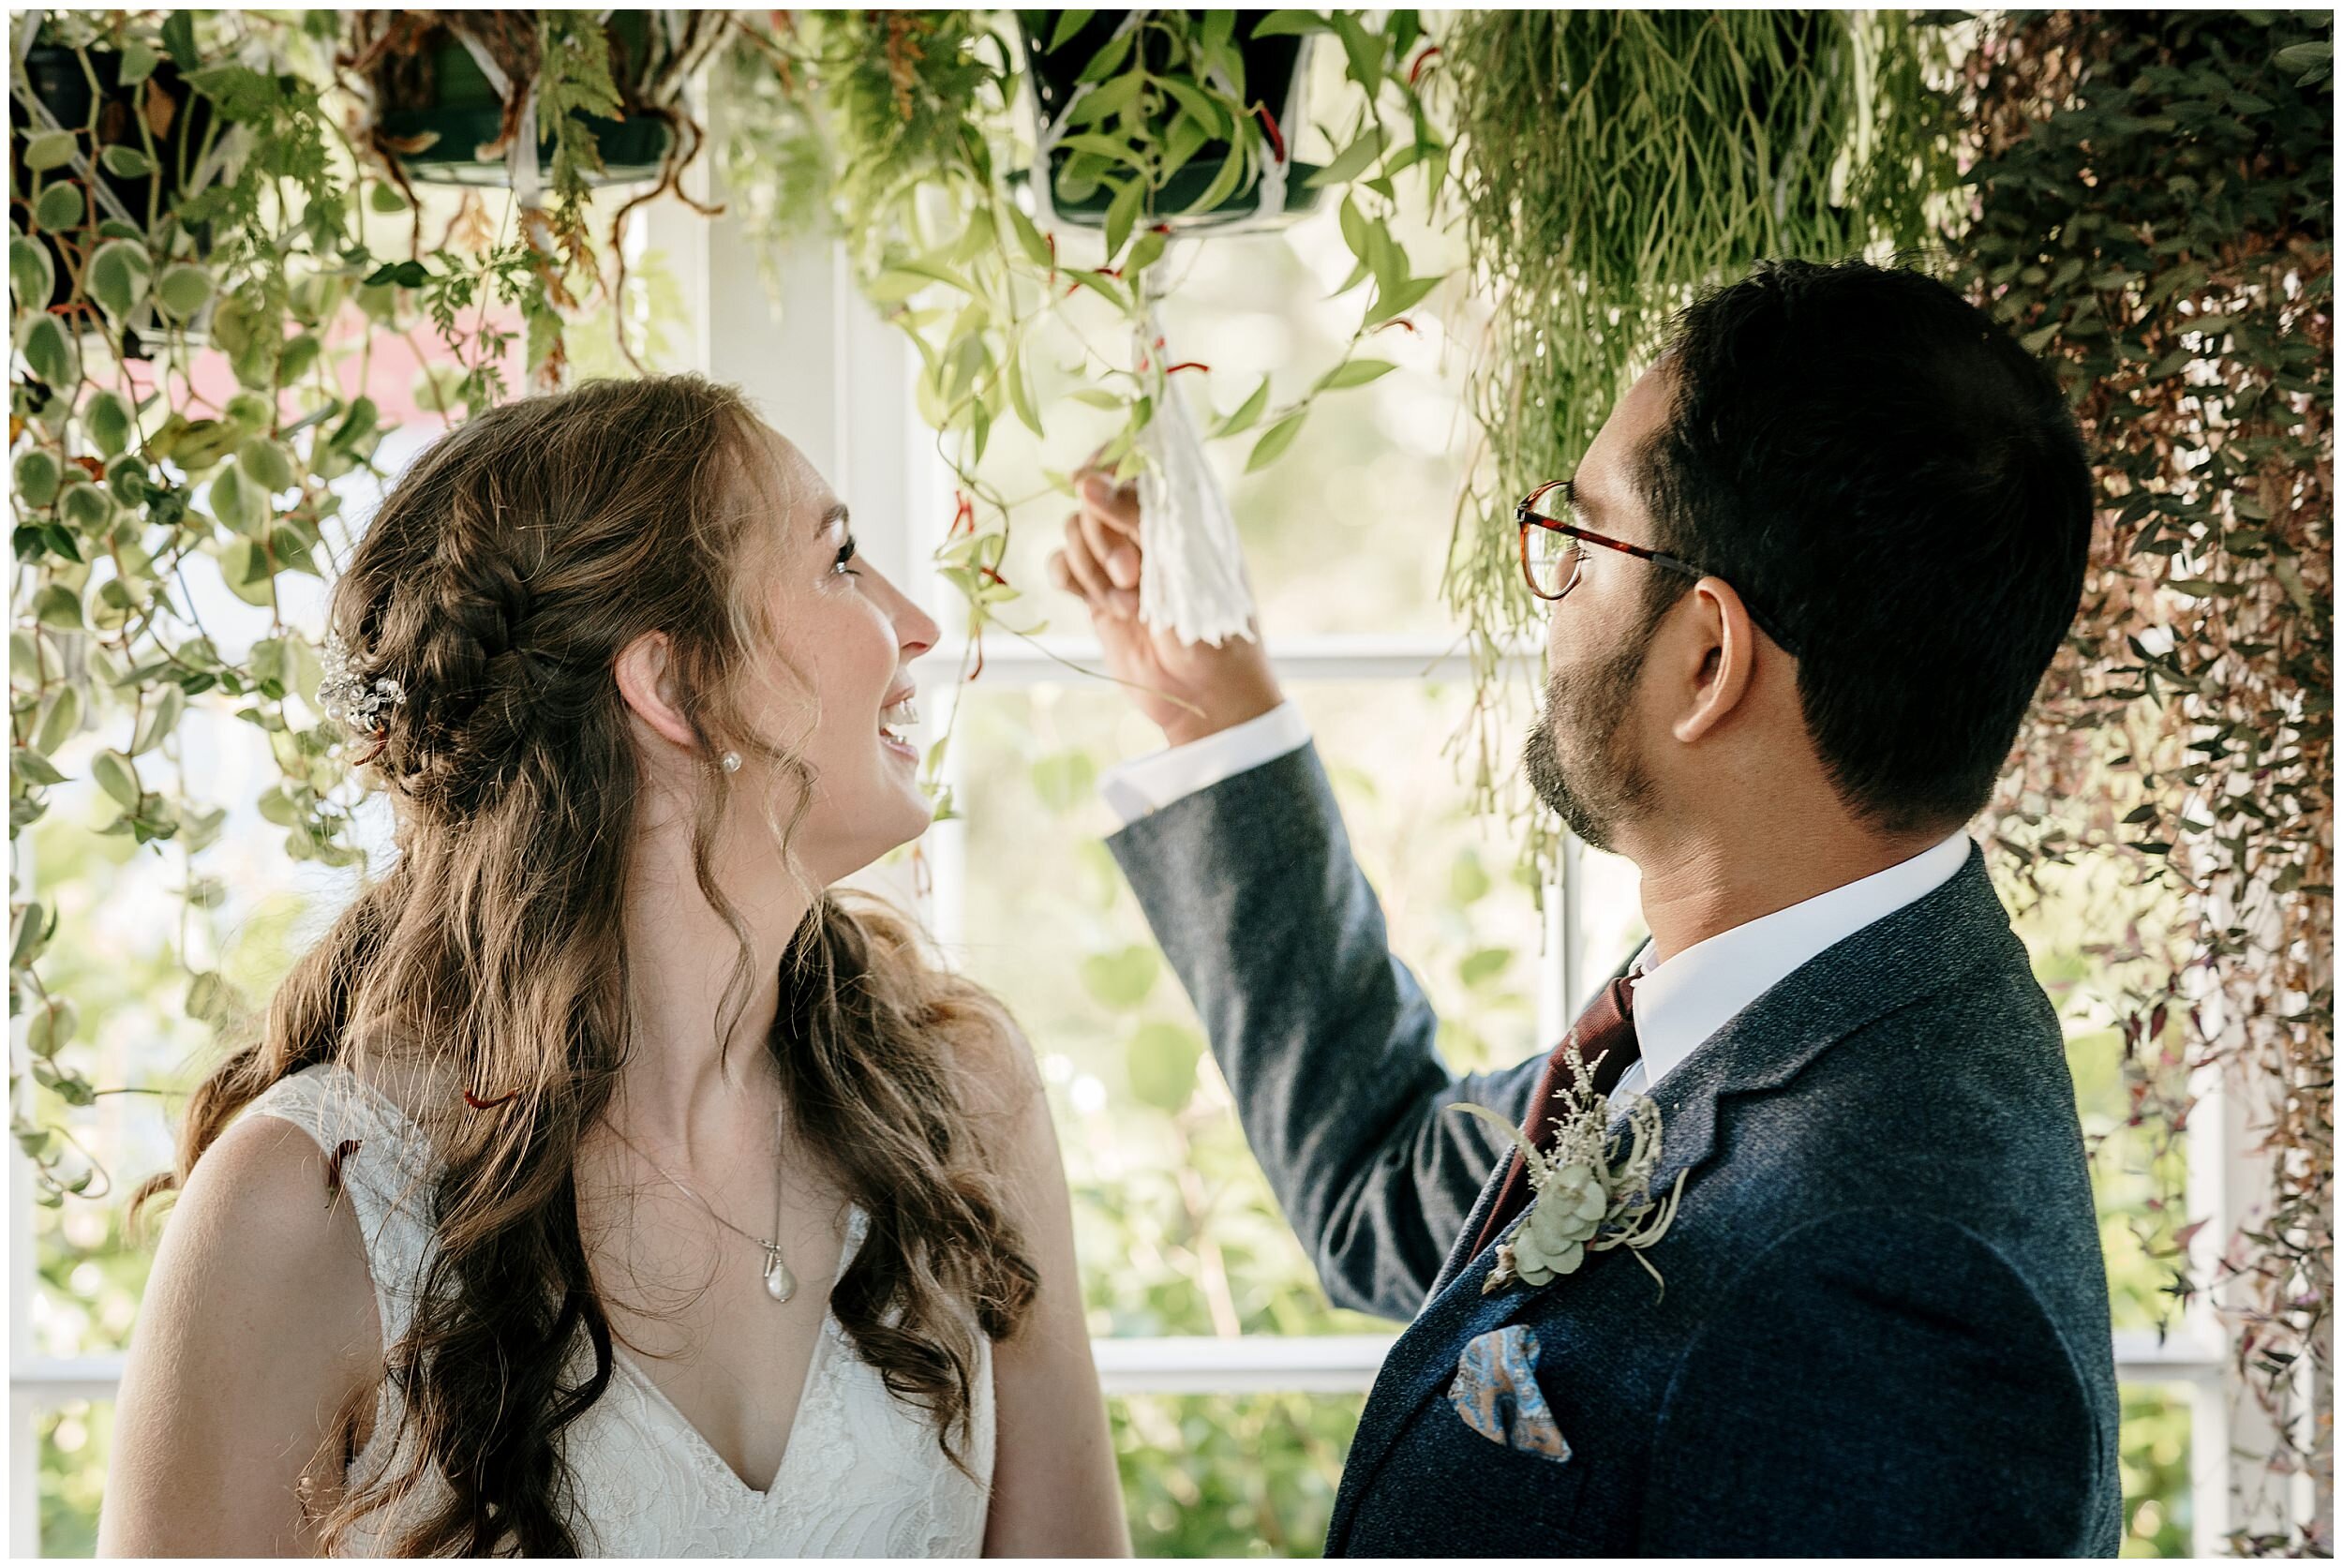 Old Forest School Wedding Venue | Auckland Wedding Photographer | Auckland Videographer | Forest Wedding | Intimate Rustic Wedding | Tauranga Venue